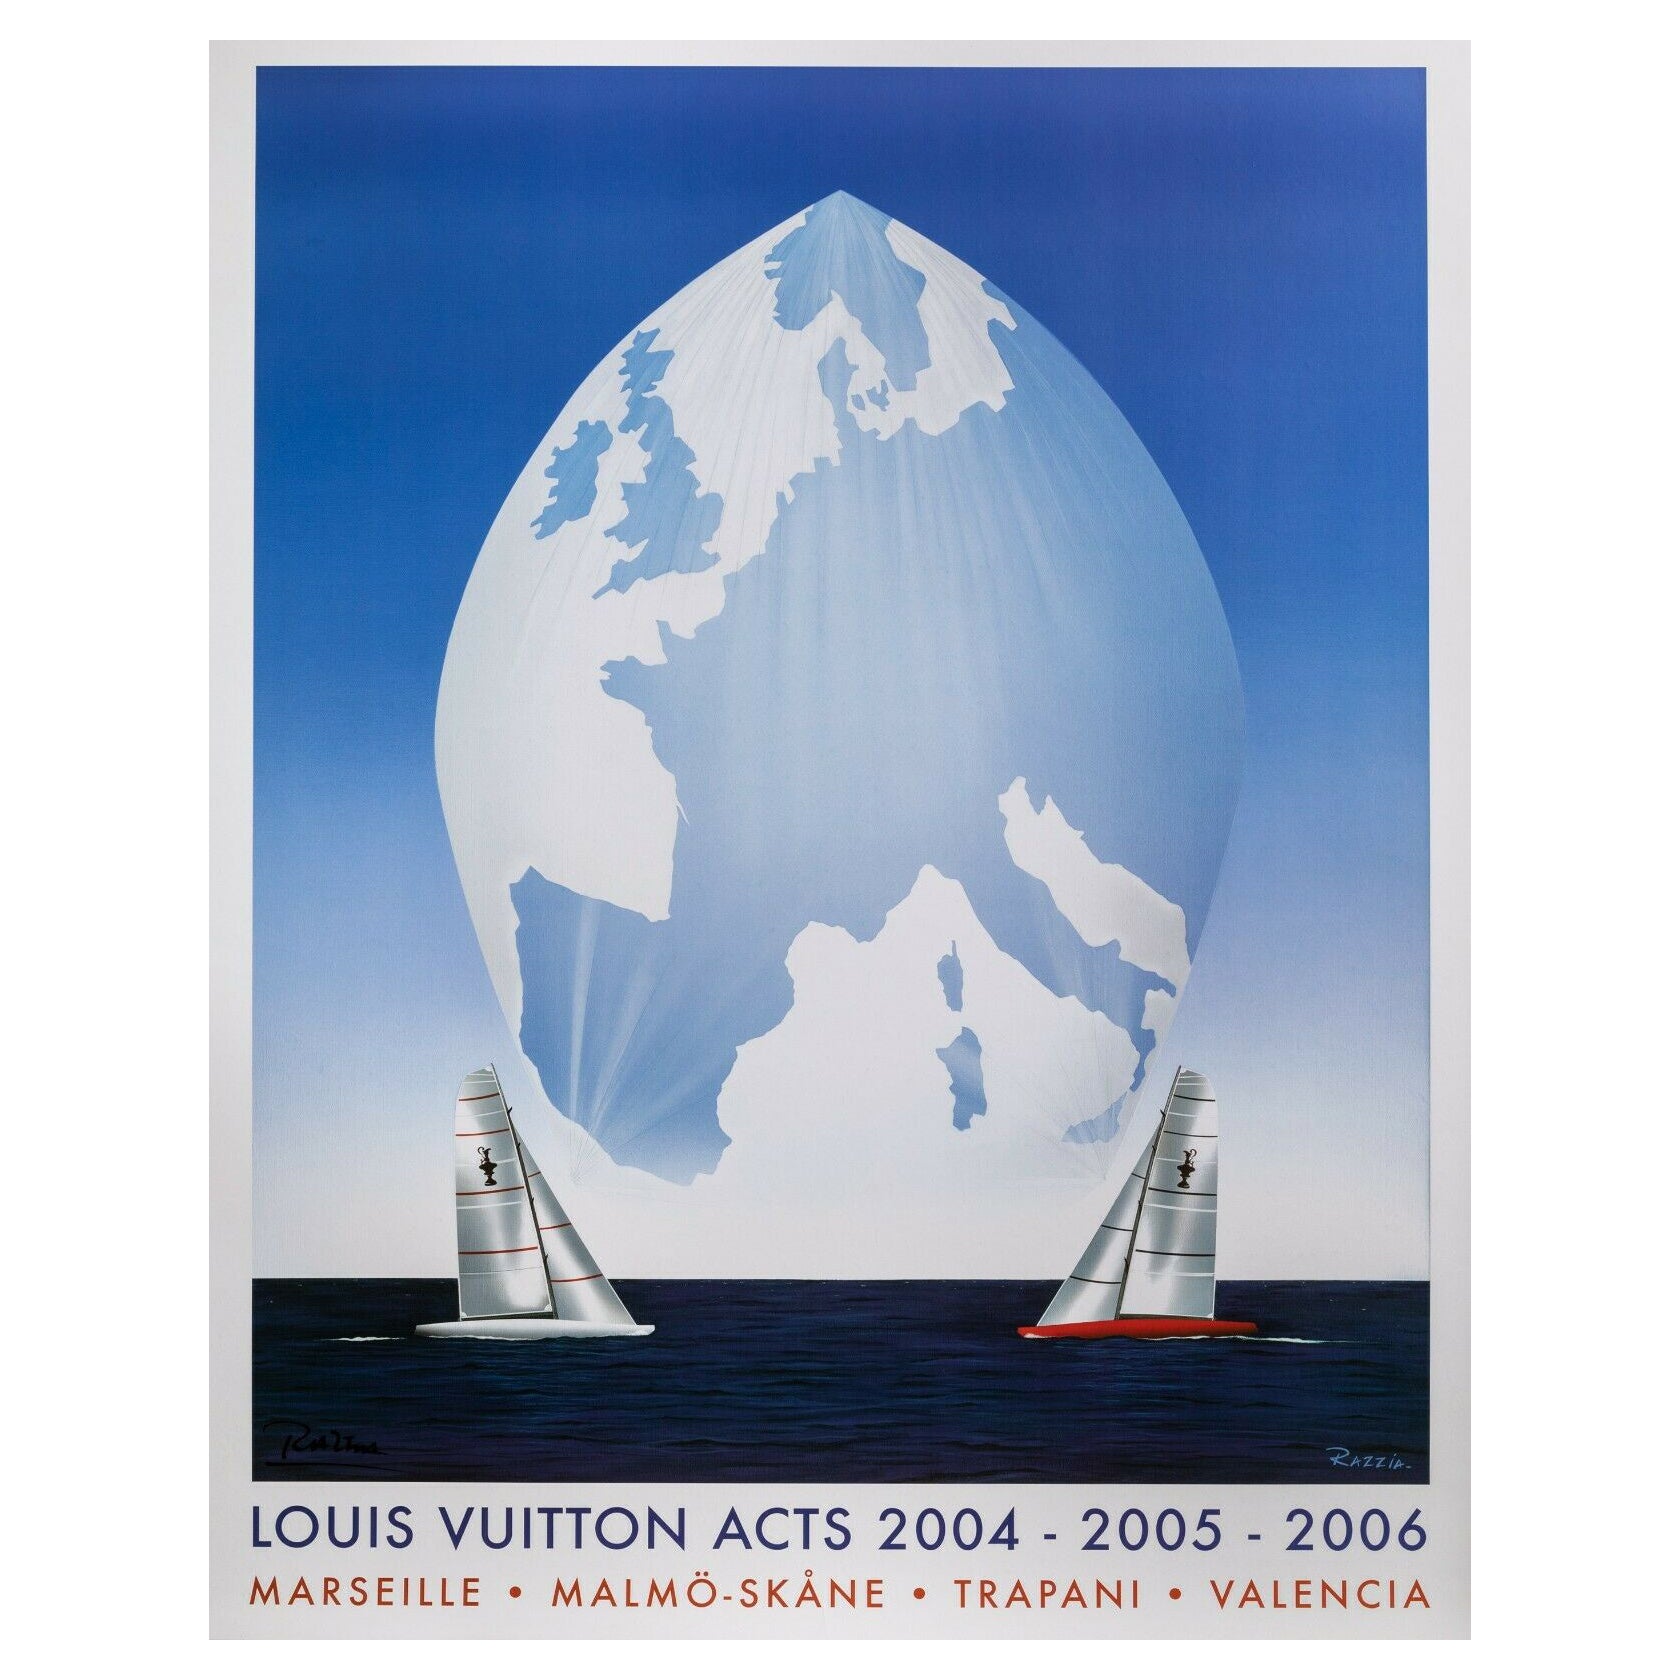 Razzia, Original Louis Vuitton Trophy Sailing Poster, America's Cup Yacht, 2006